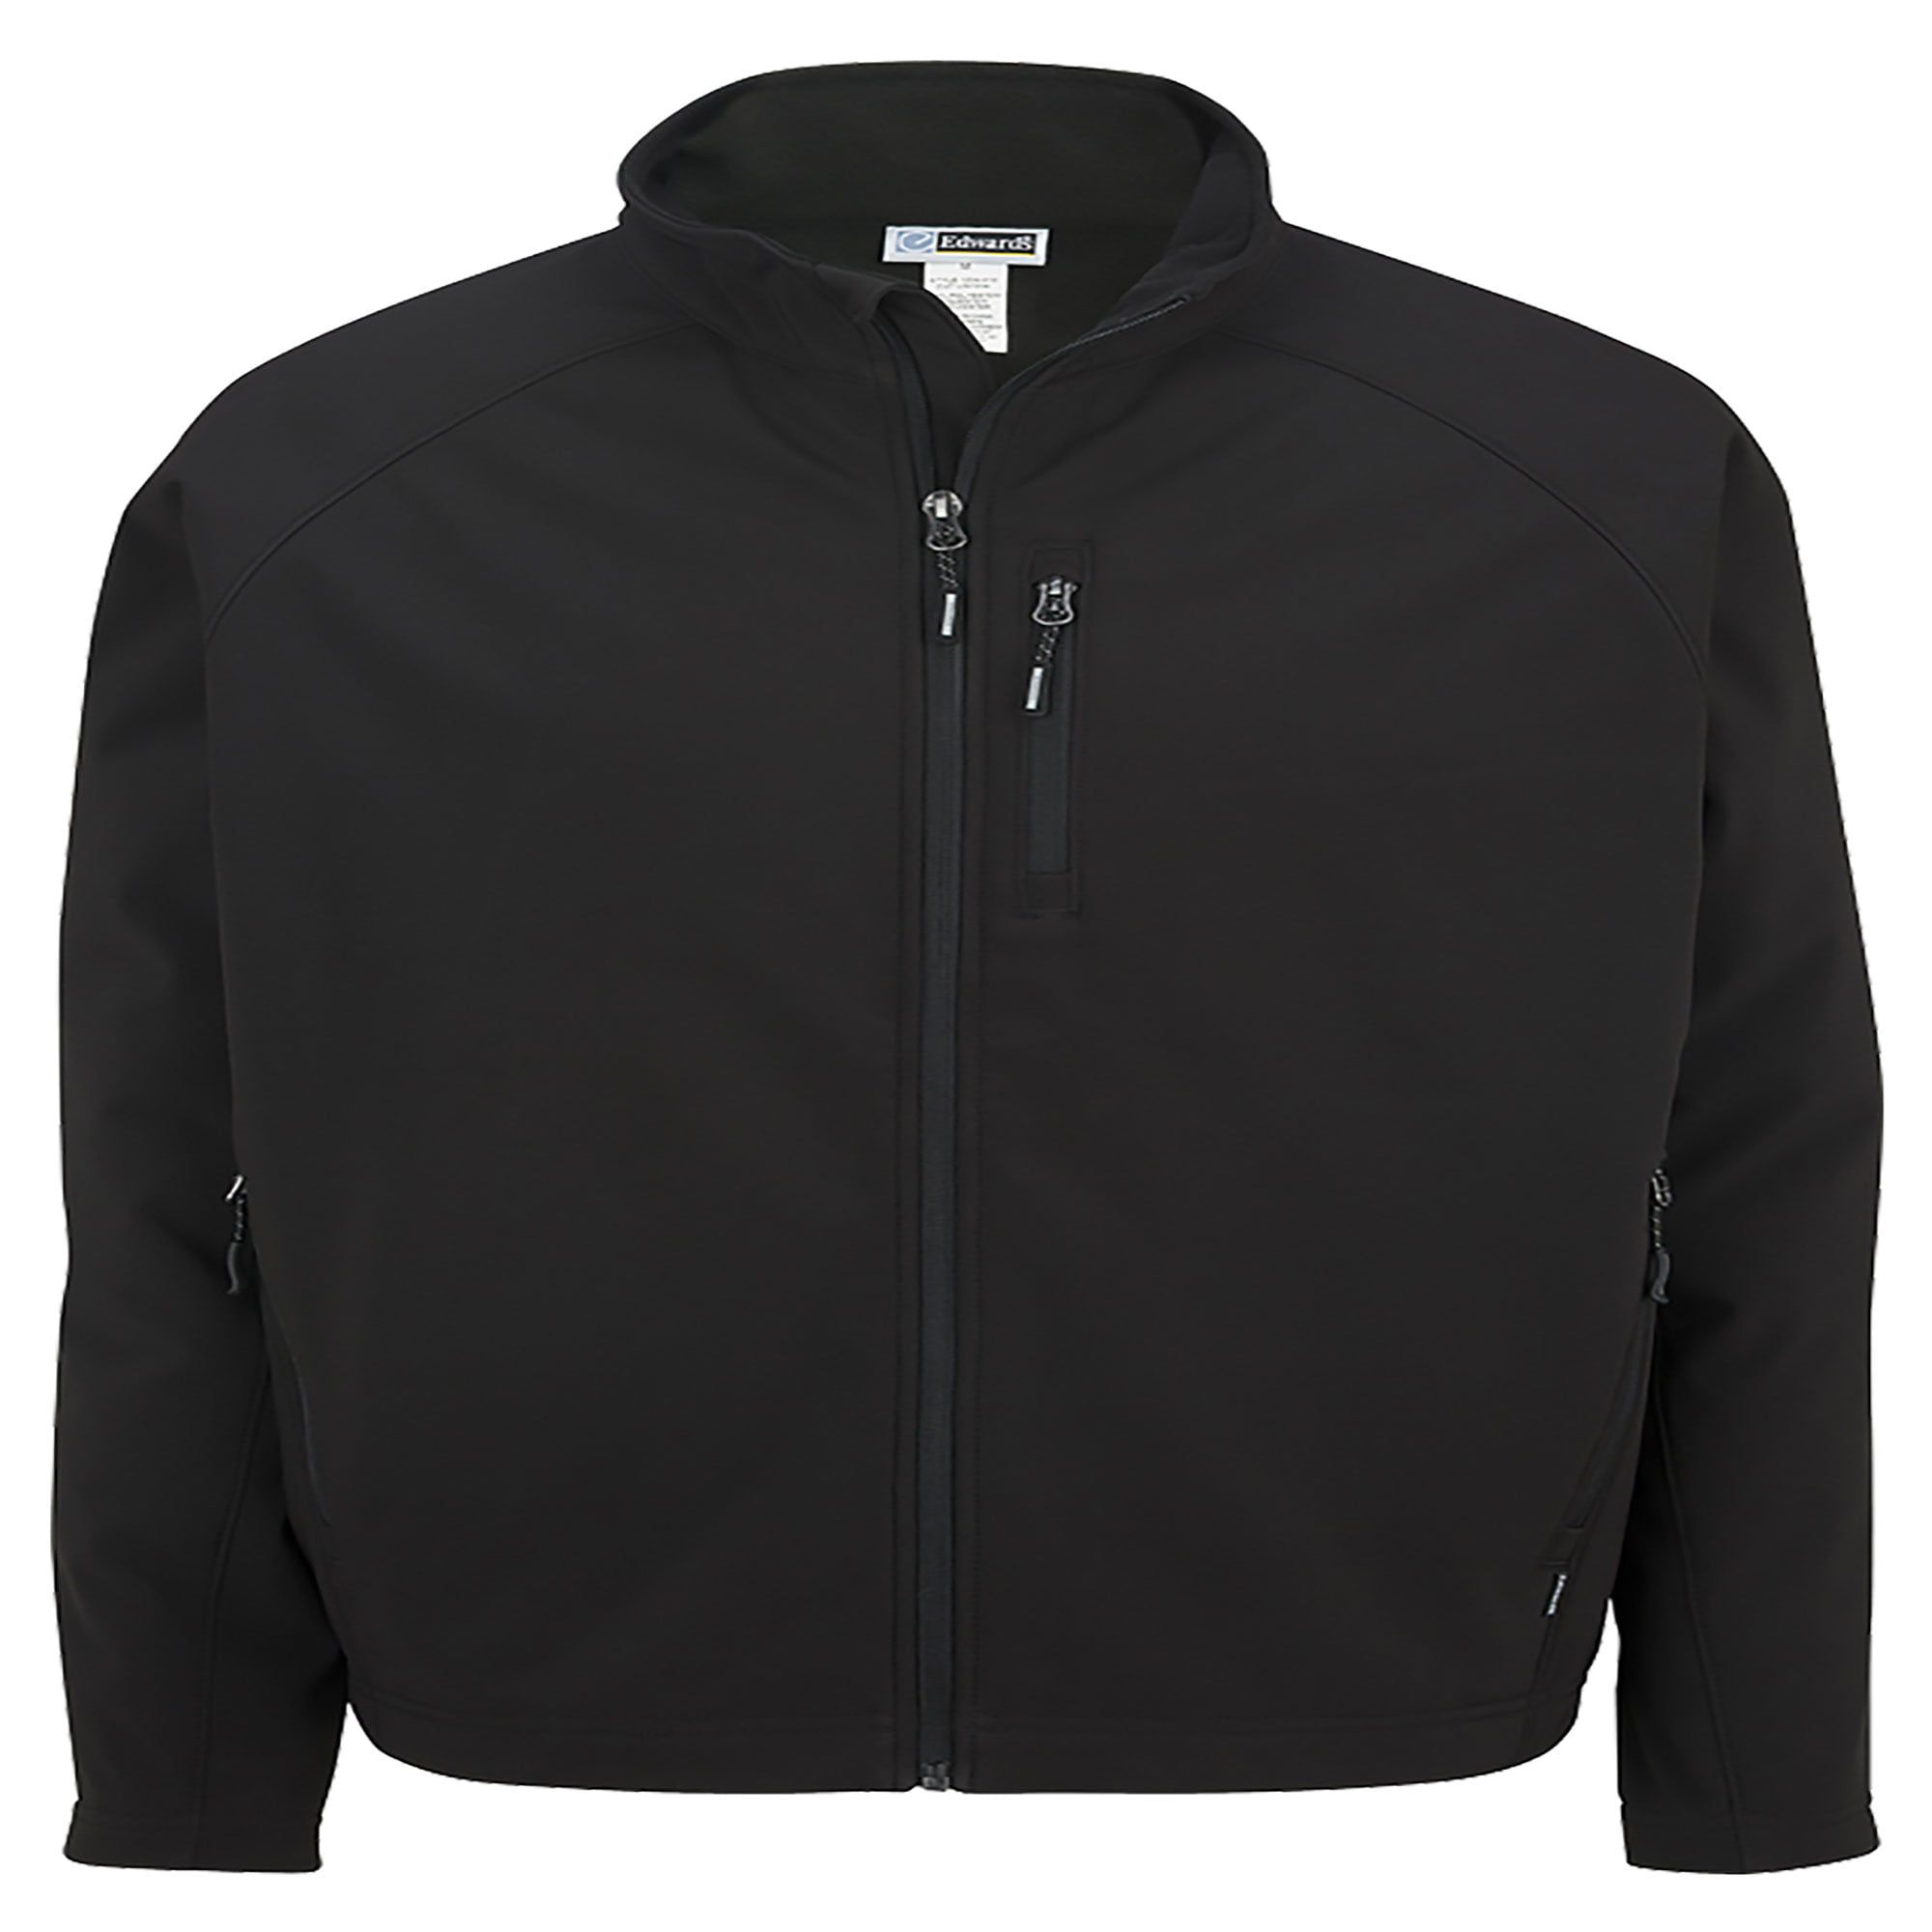 Edwards Garment Soft-shell Jacket, Style 3420 - Walmart.com